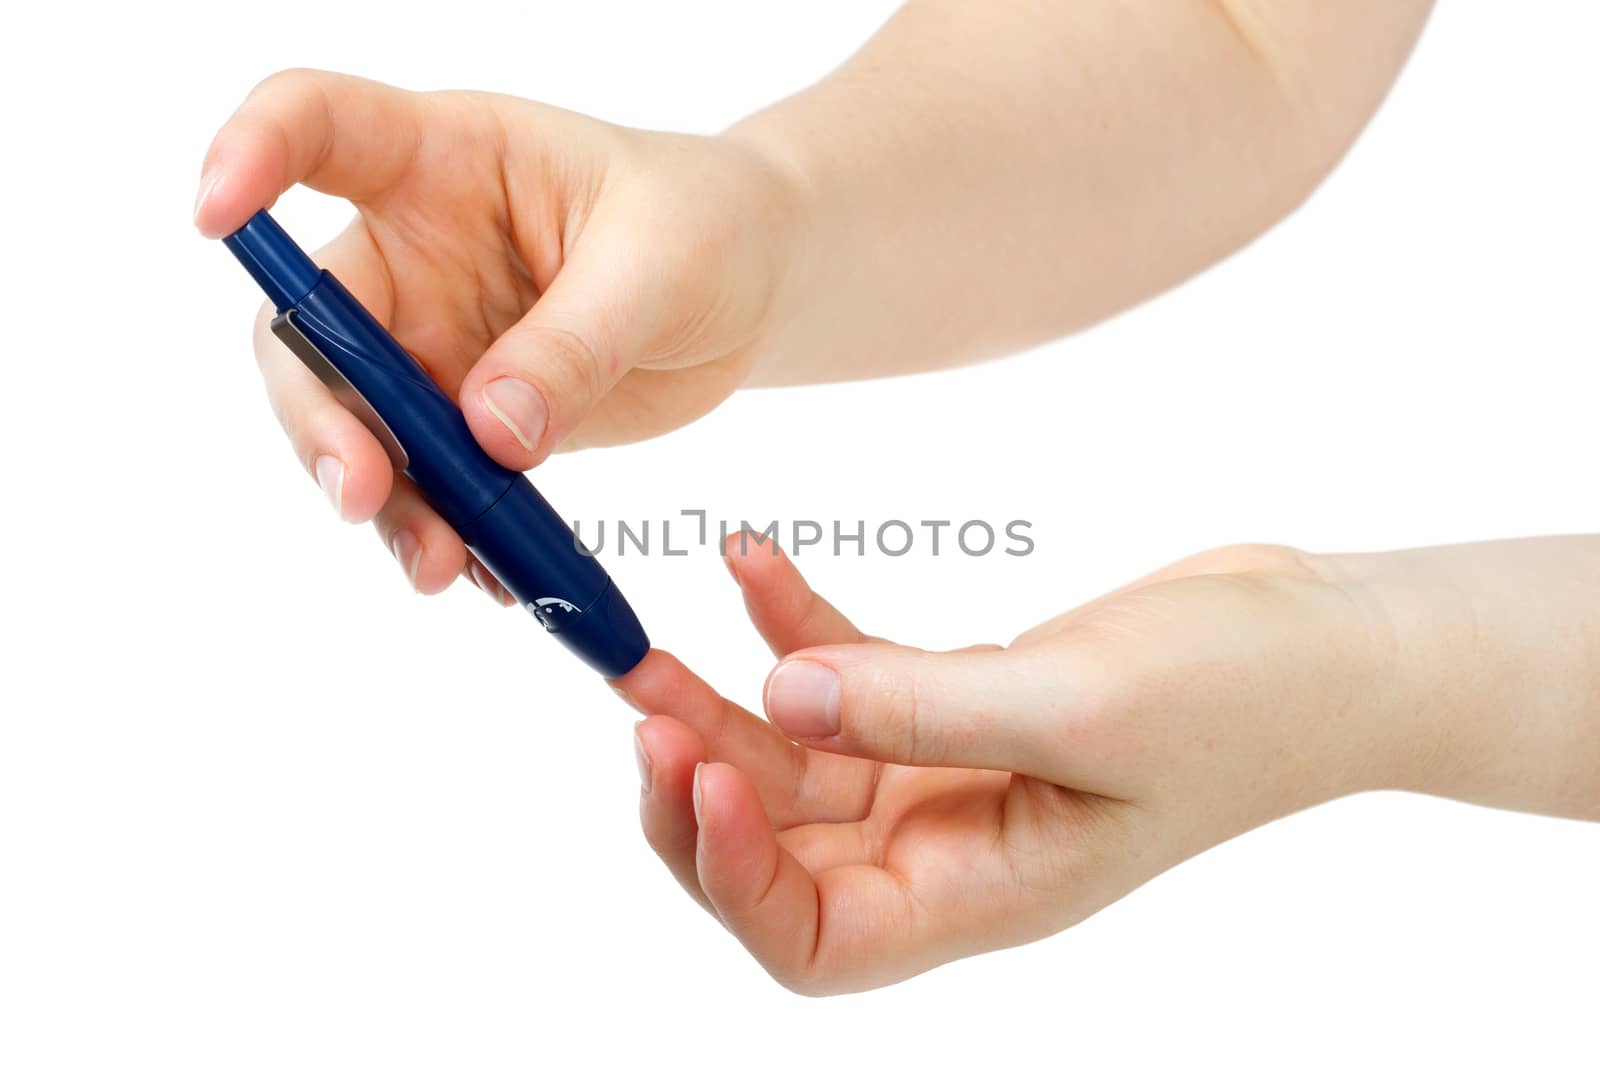 Lancet for piercing a finger at a diabetes